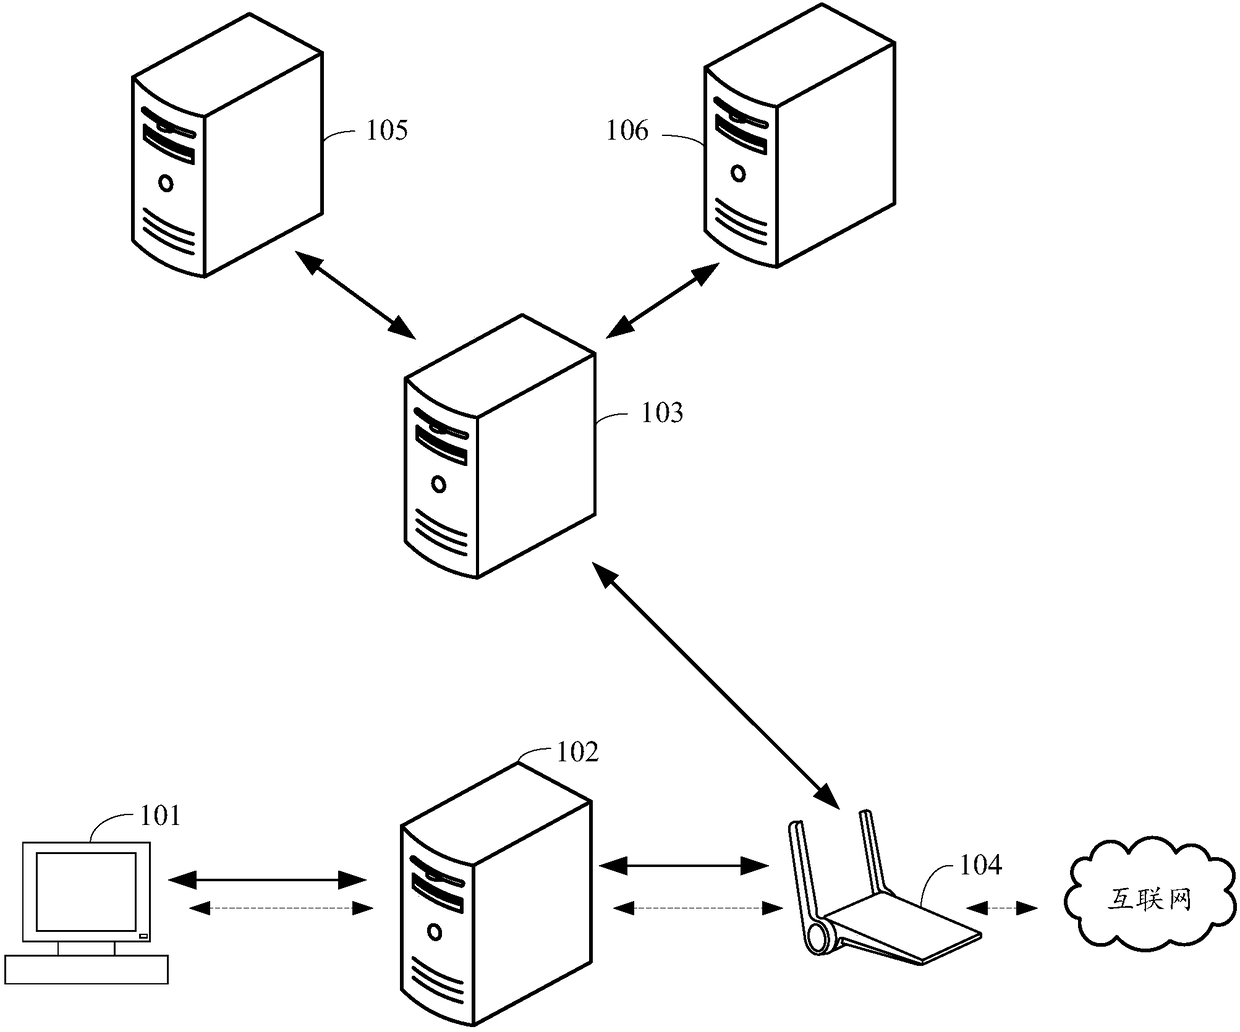 BRAS (Broadband Remote Access Server) system-based message encapsulation method and device